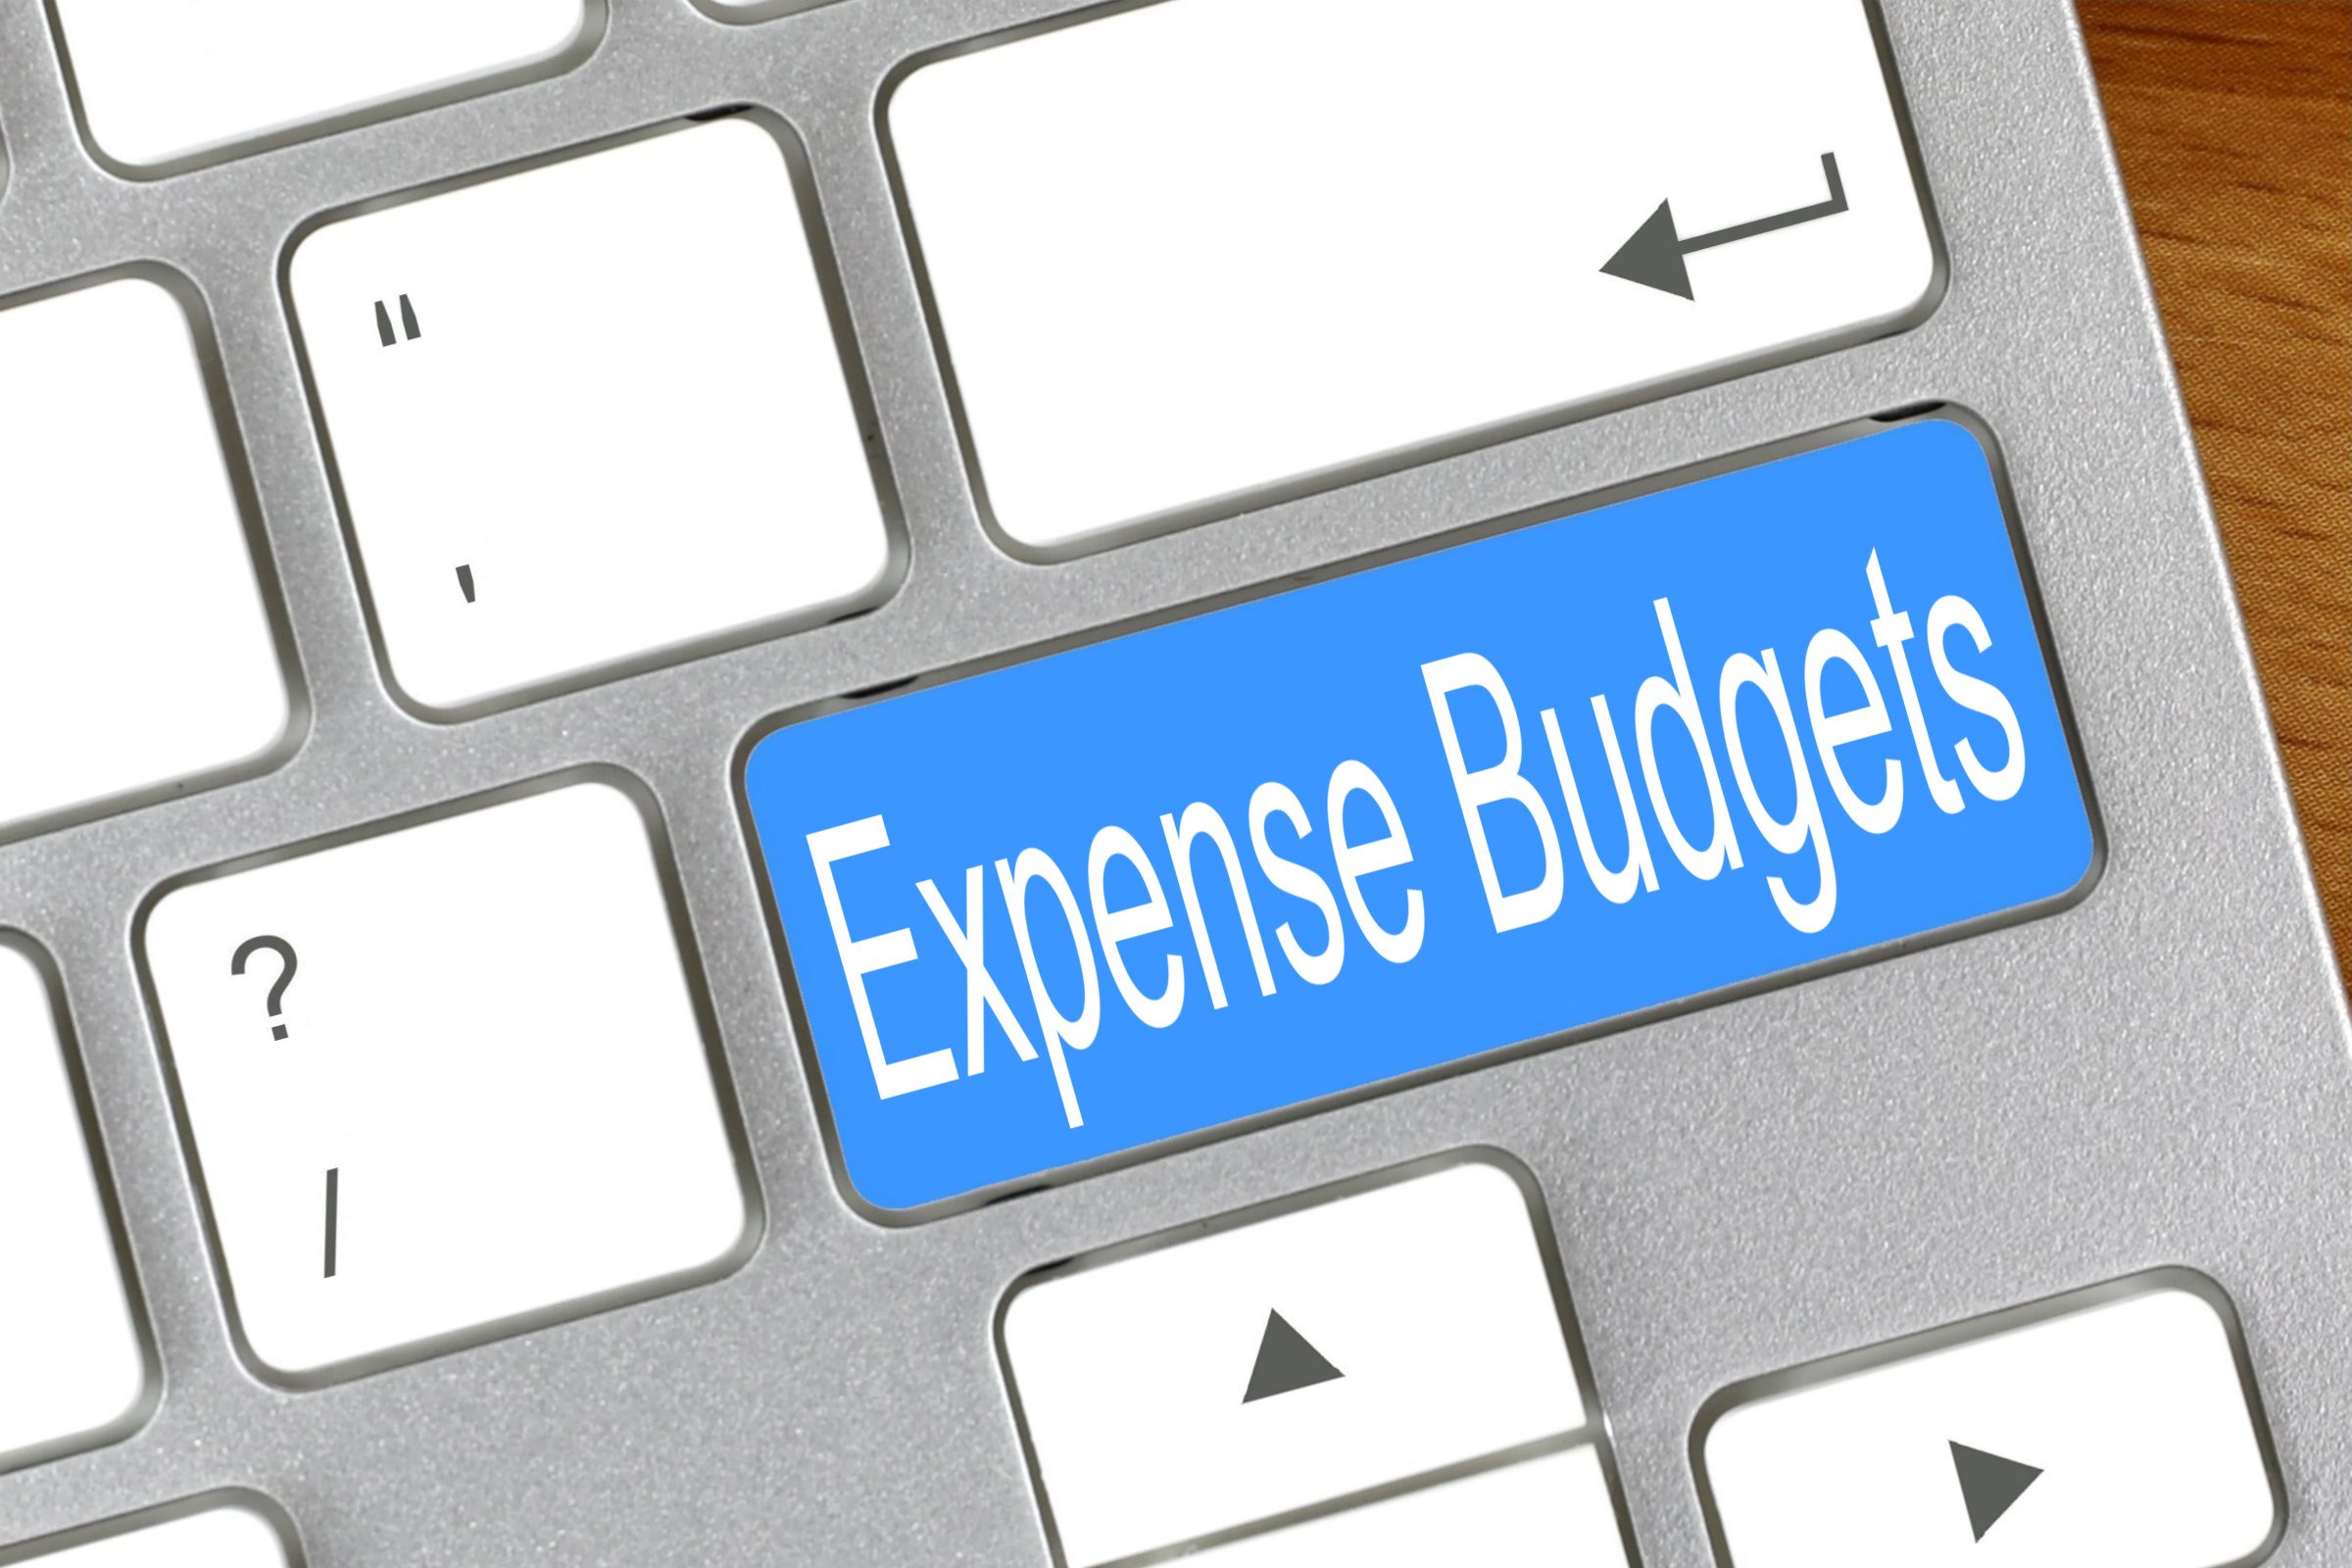 expense budgets